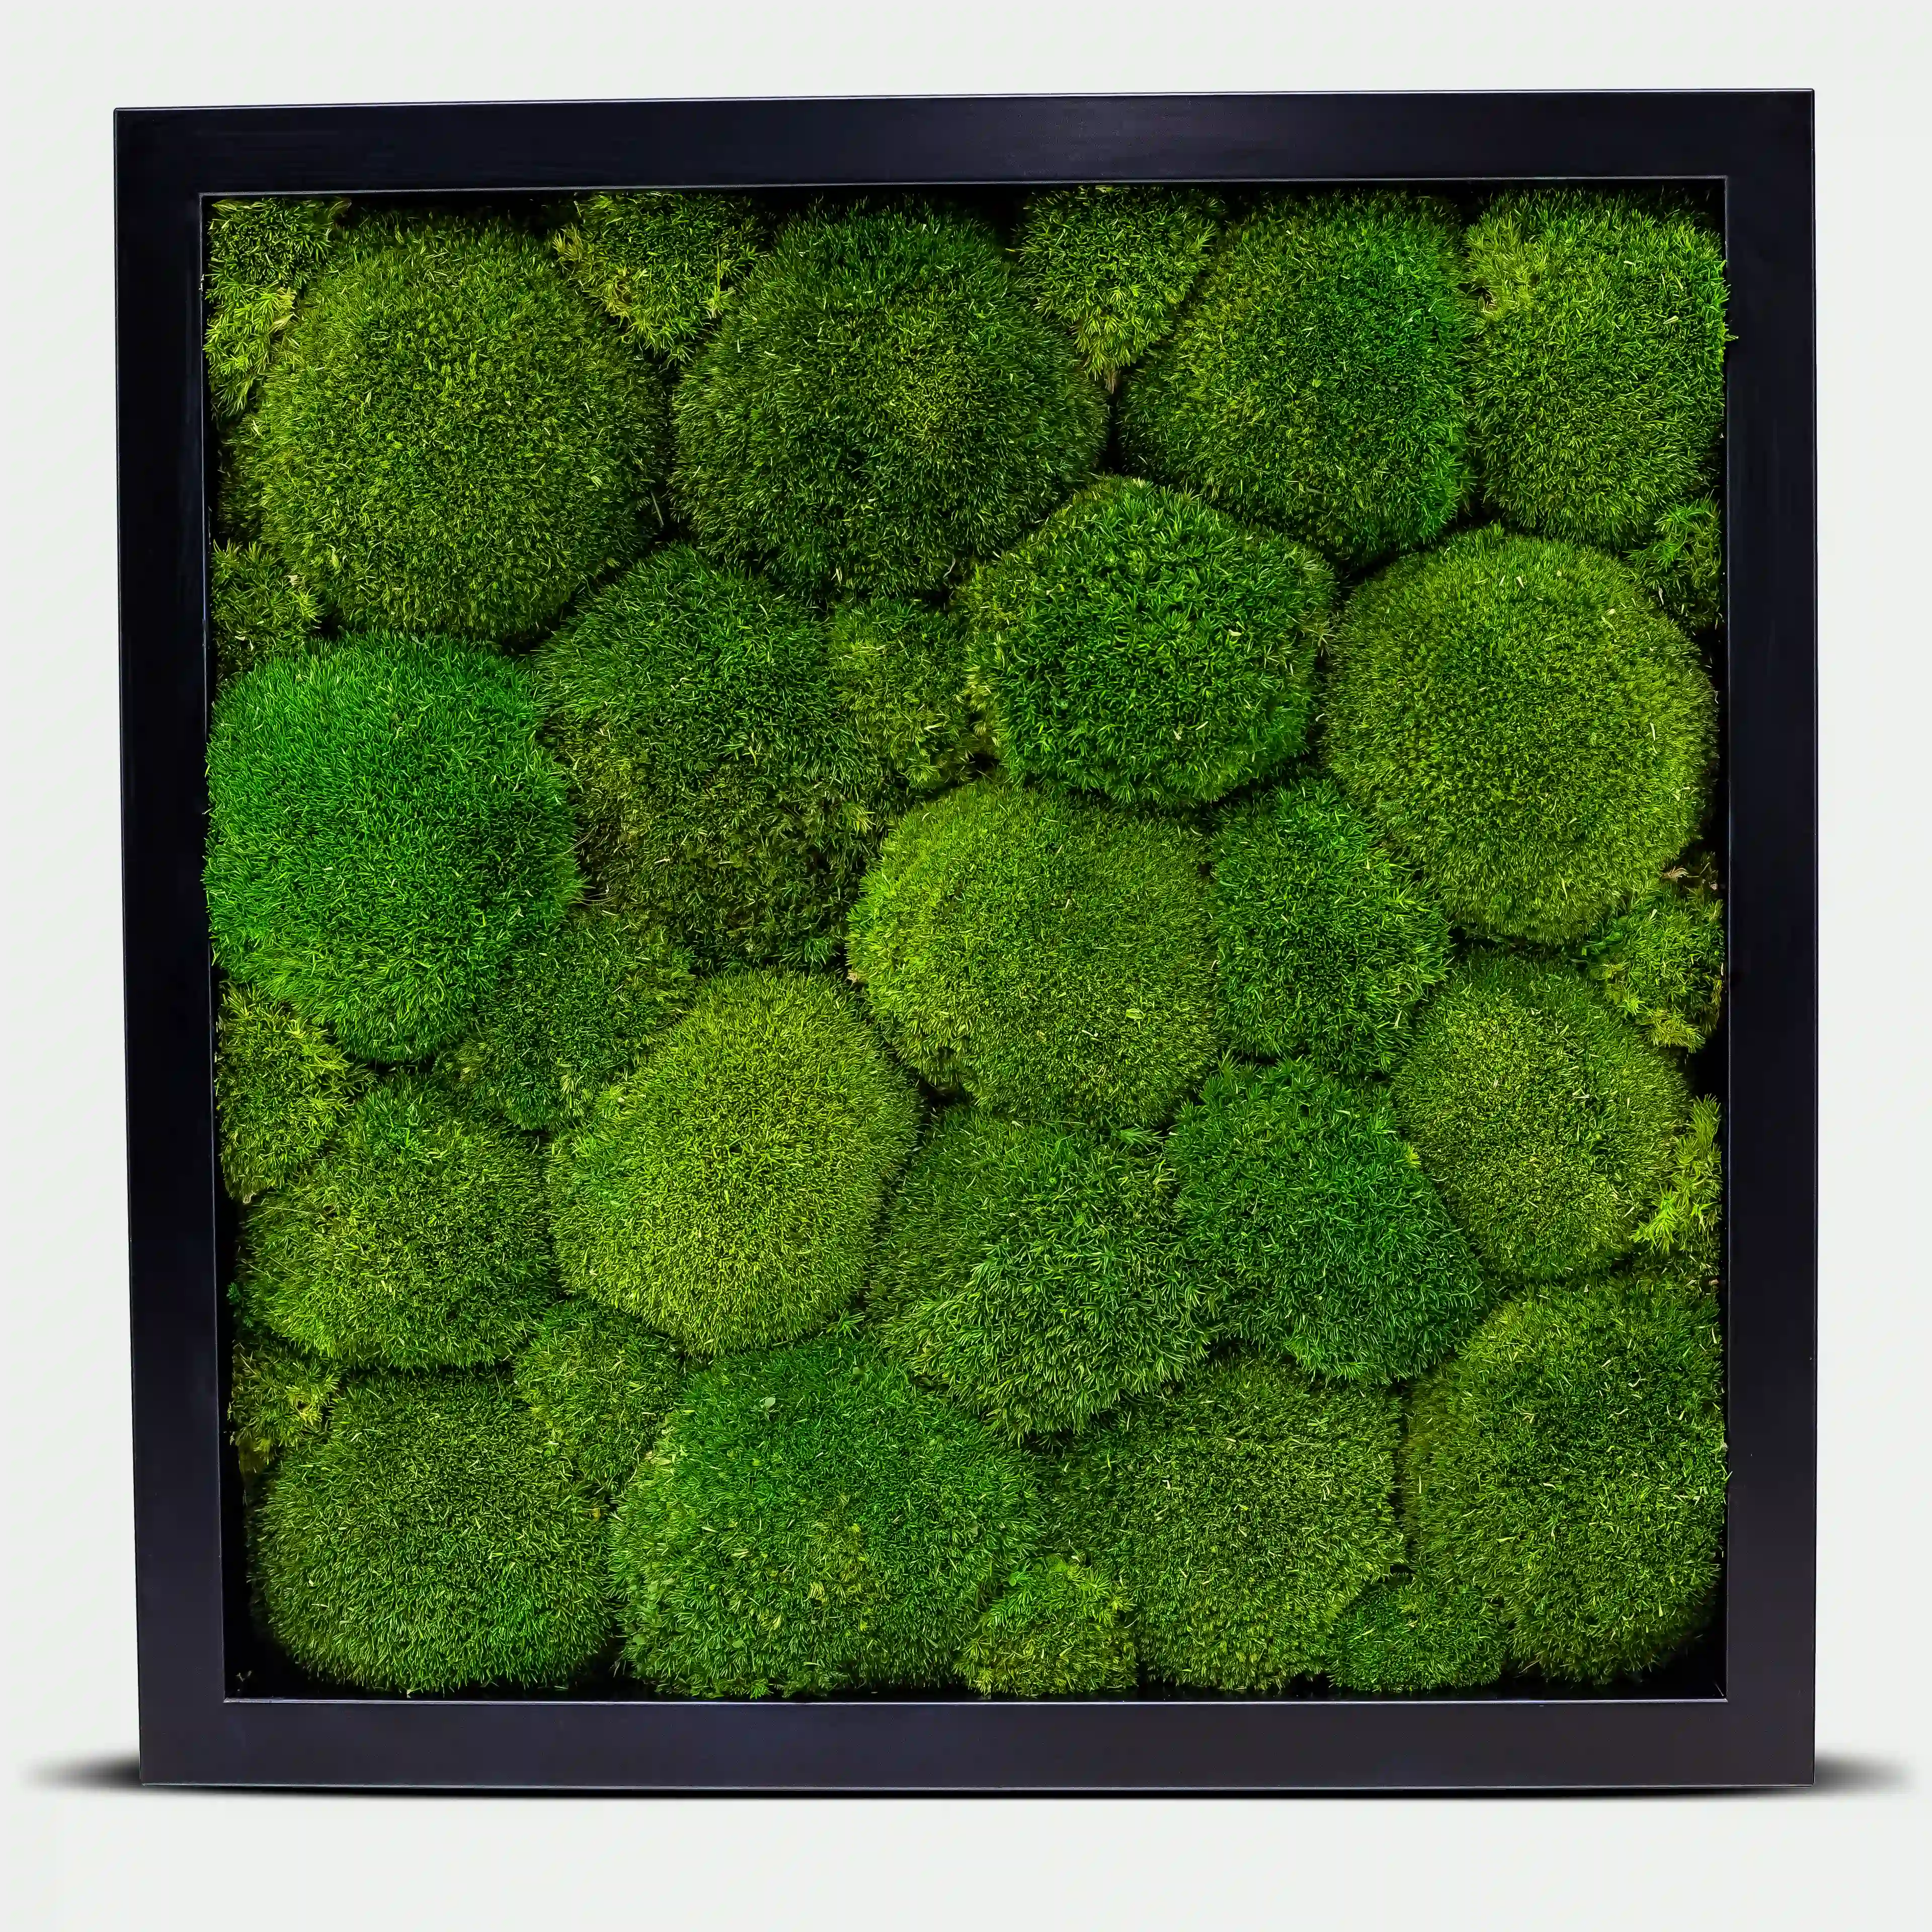 Quadratisches Kugelmoosbild - 40 x 40 cm